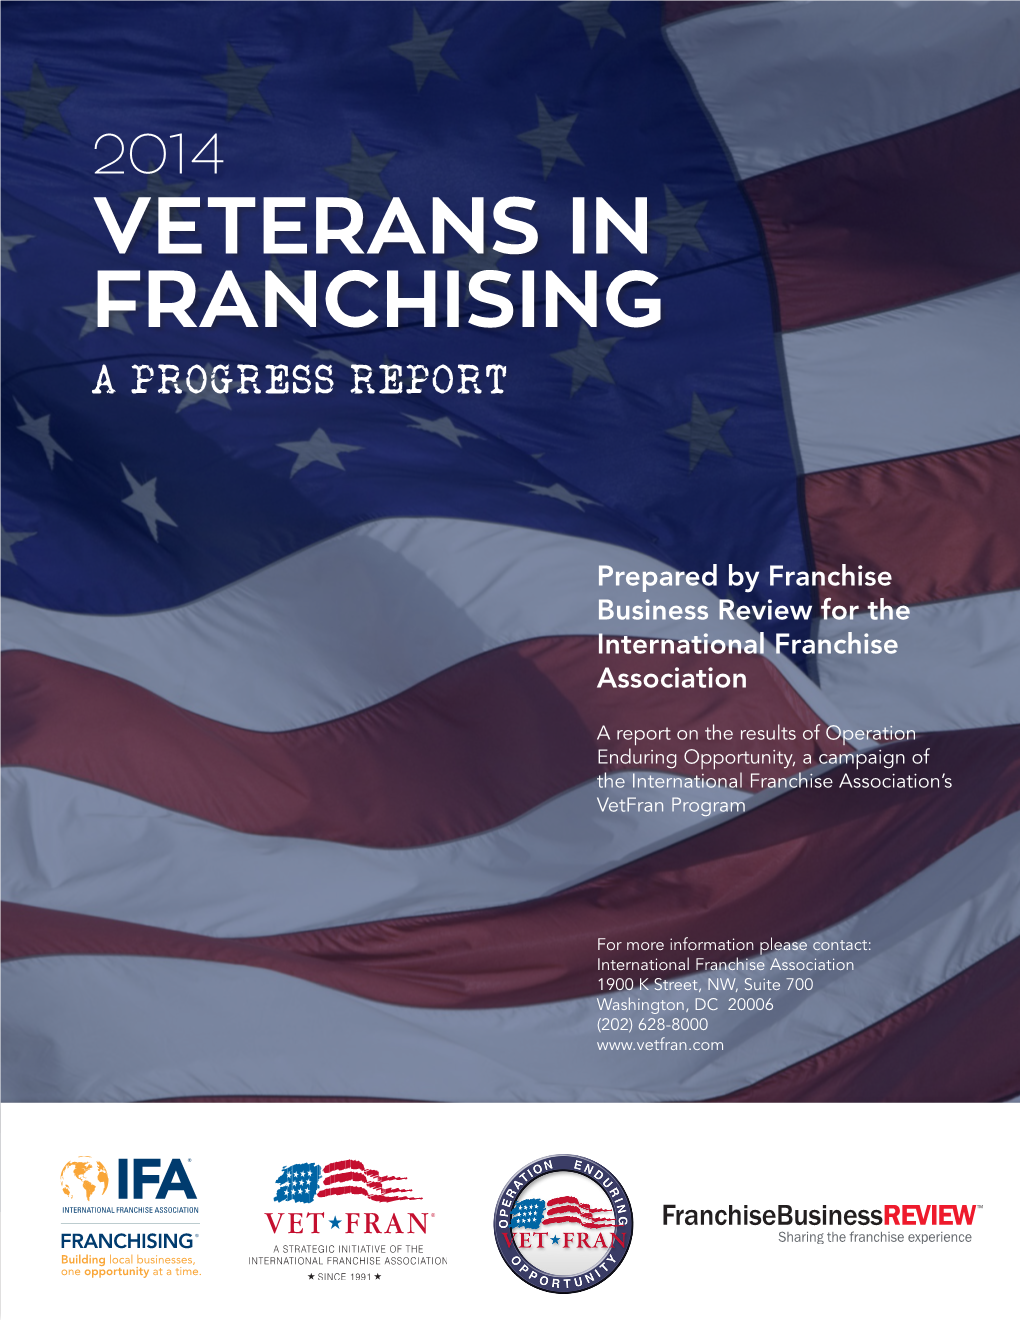 2014 Veterans in Franchising Progress Report